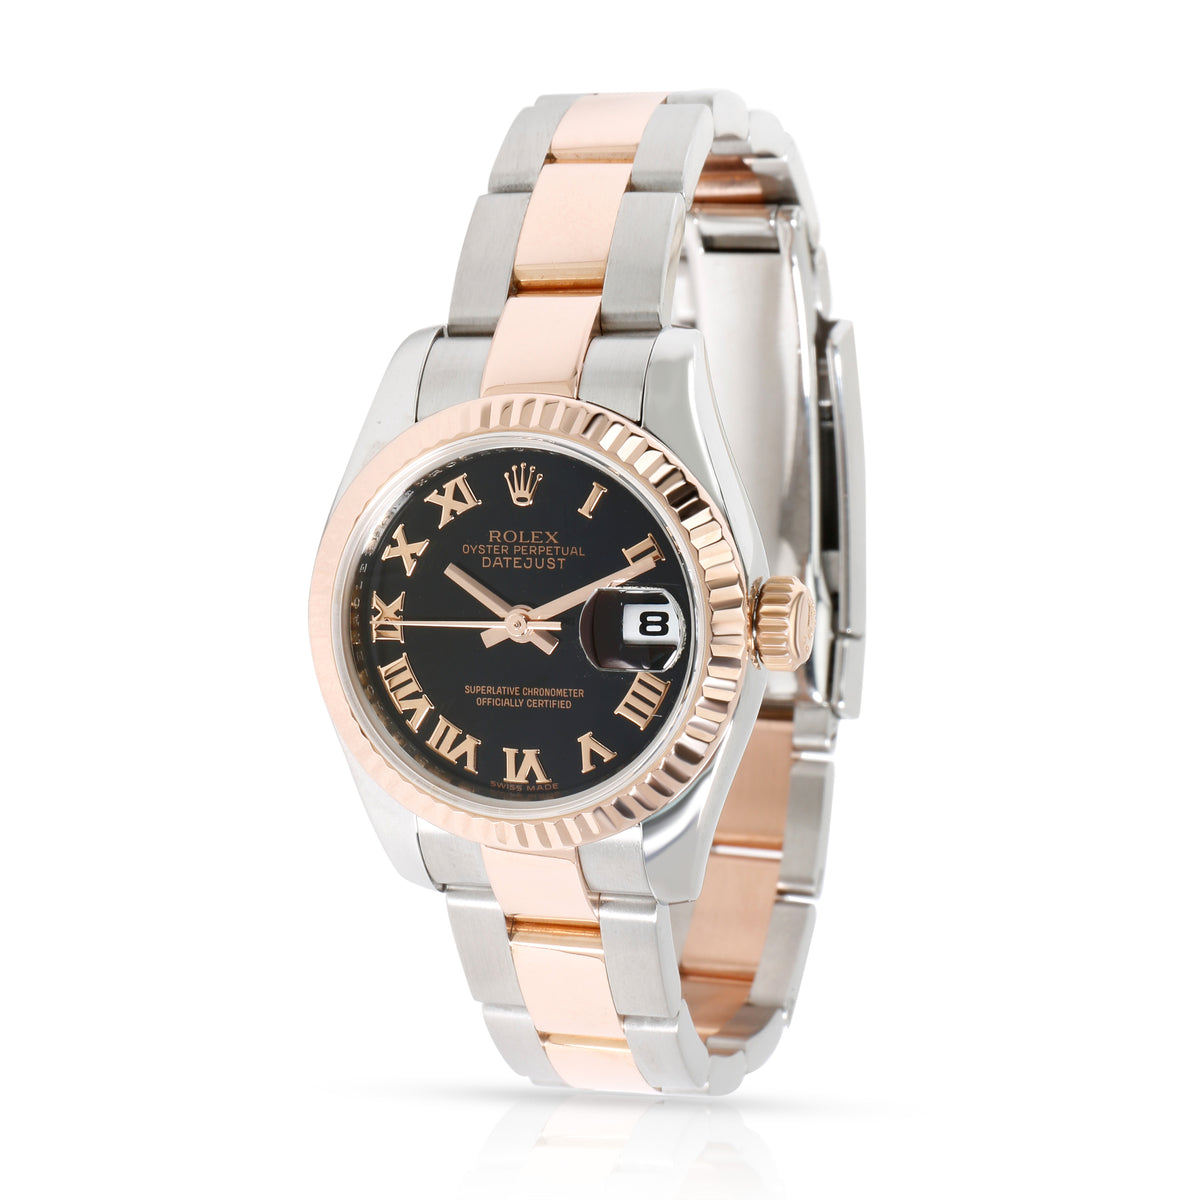 Rolex Datejust 179171 Women's Watch in 18kt Stainless Steel/Rose Gold